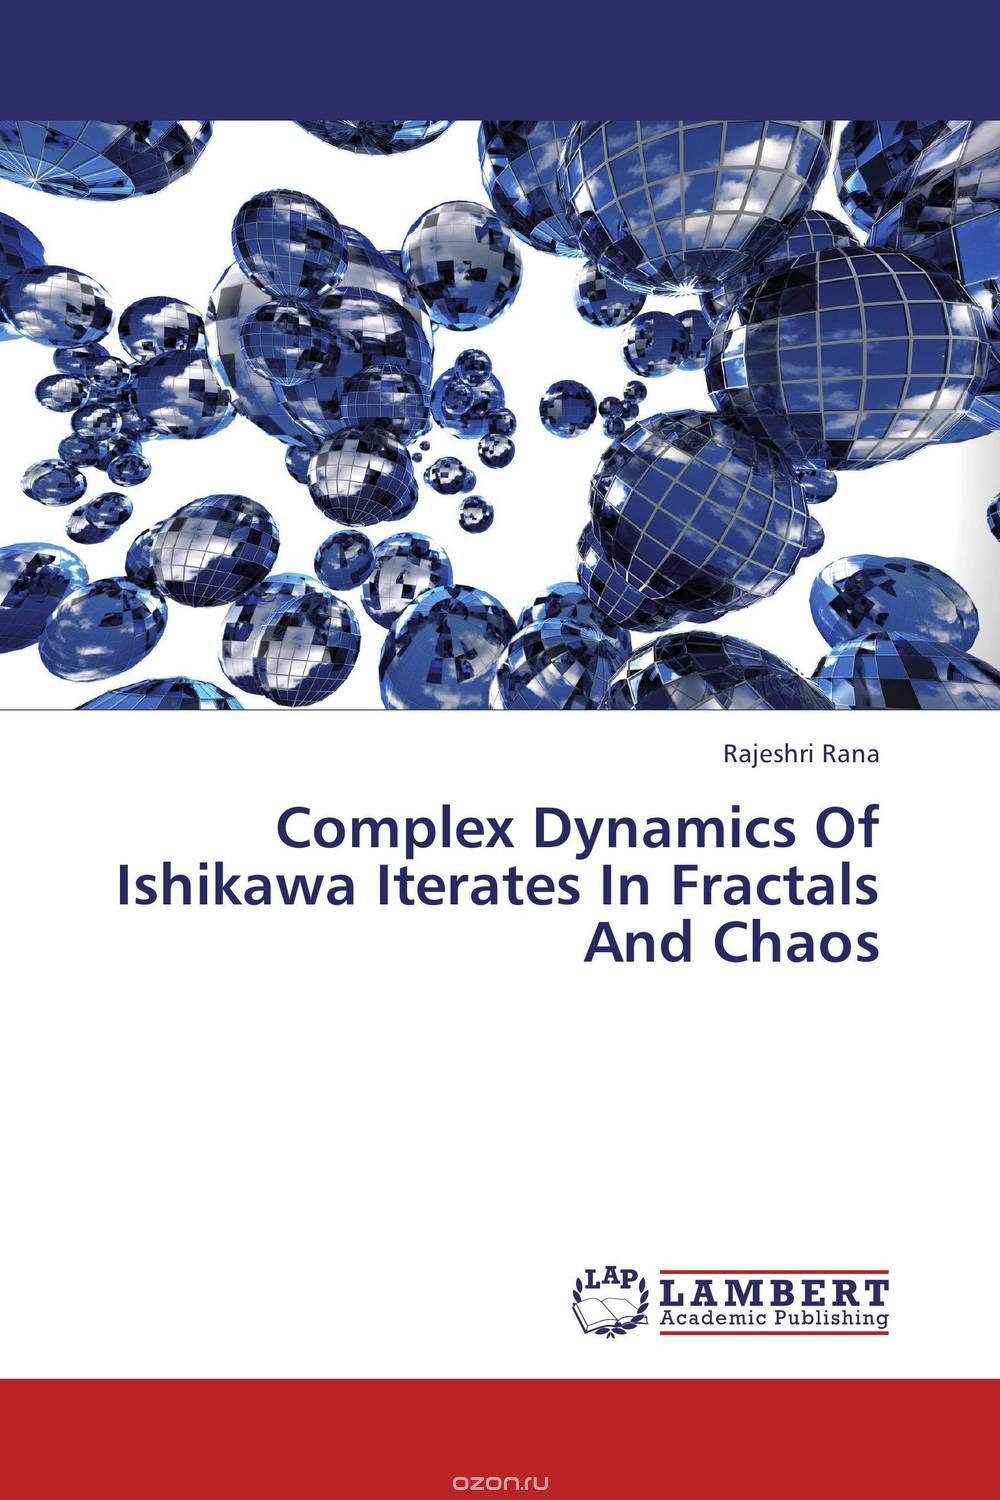 Скачать книгу "Complex Dynamics Of Ishikawa Iterates In Fractals And Chaos"